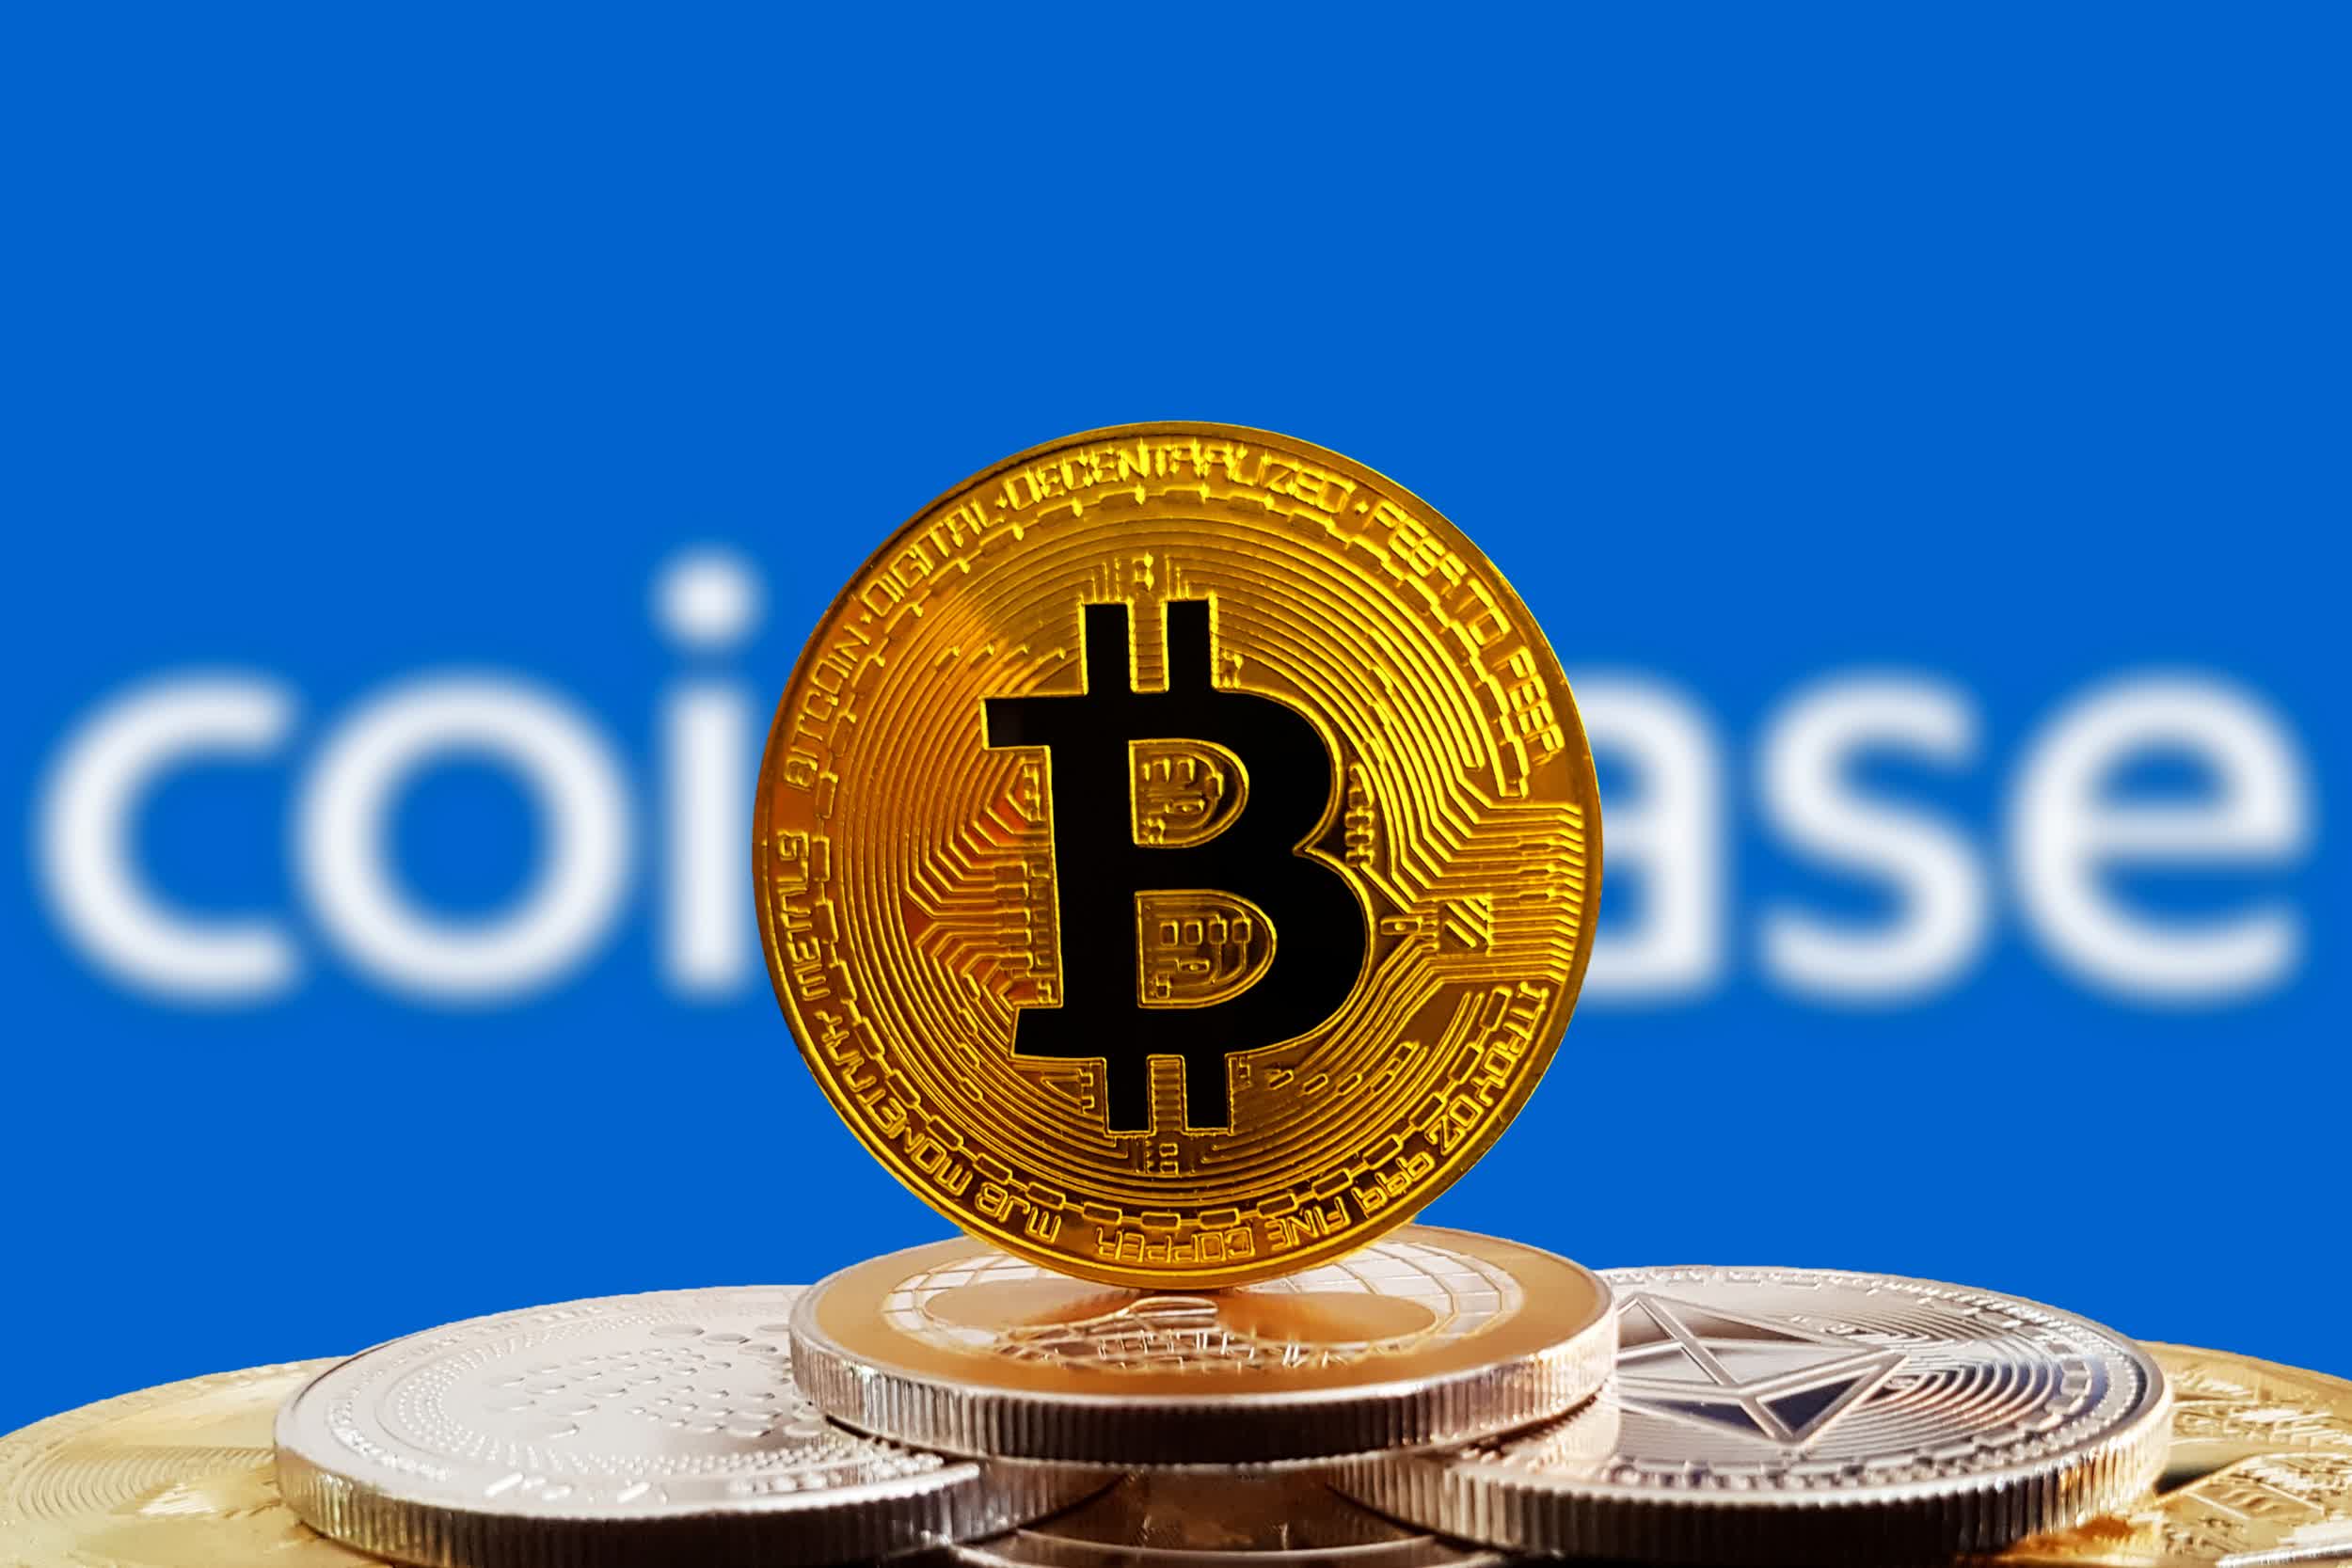 can i buy a quarter of a bitcoin on coinbase